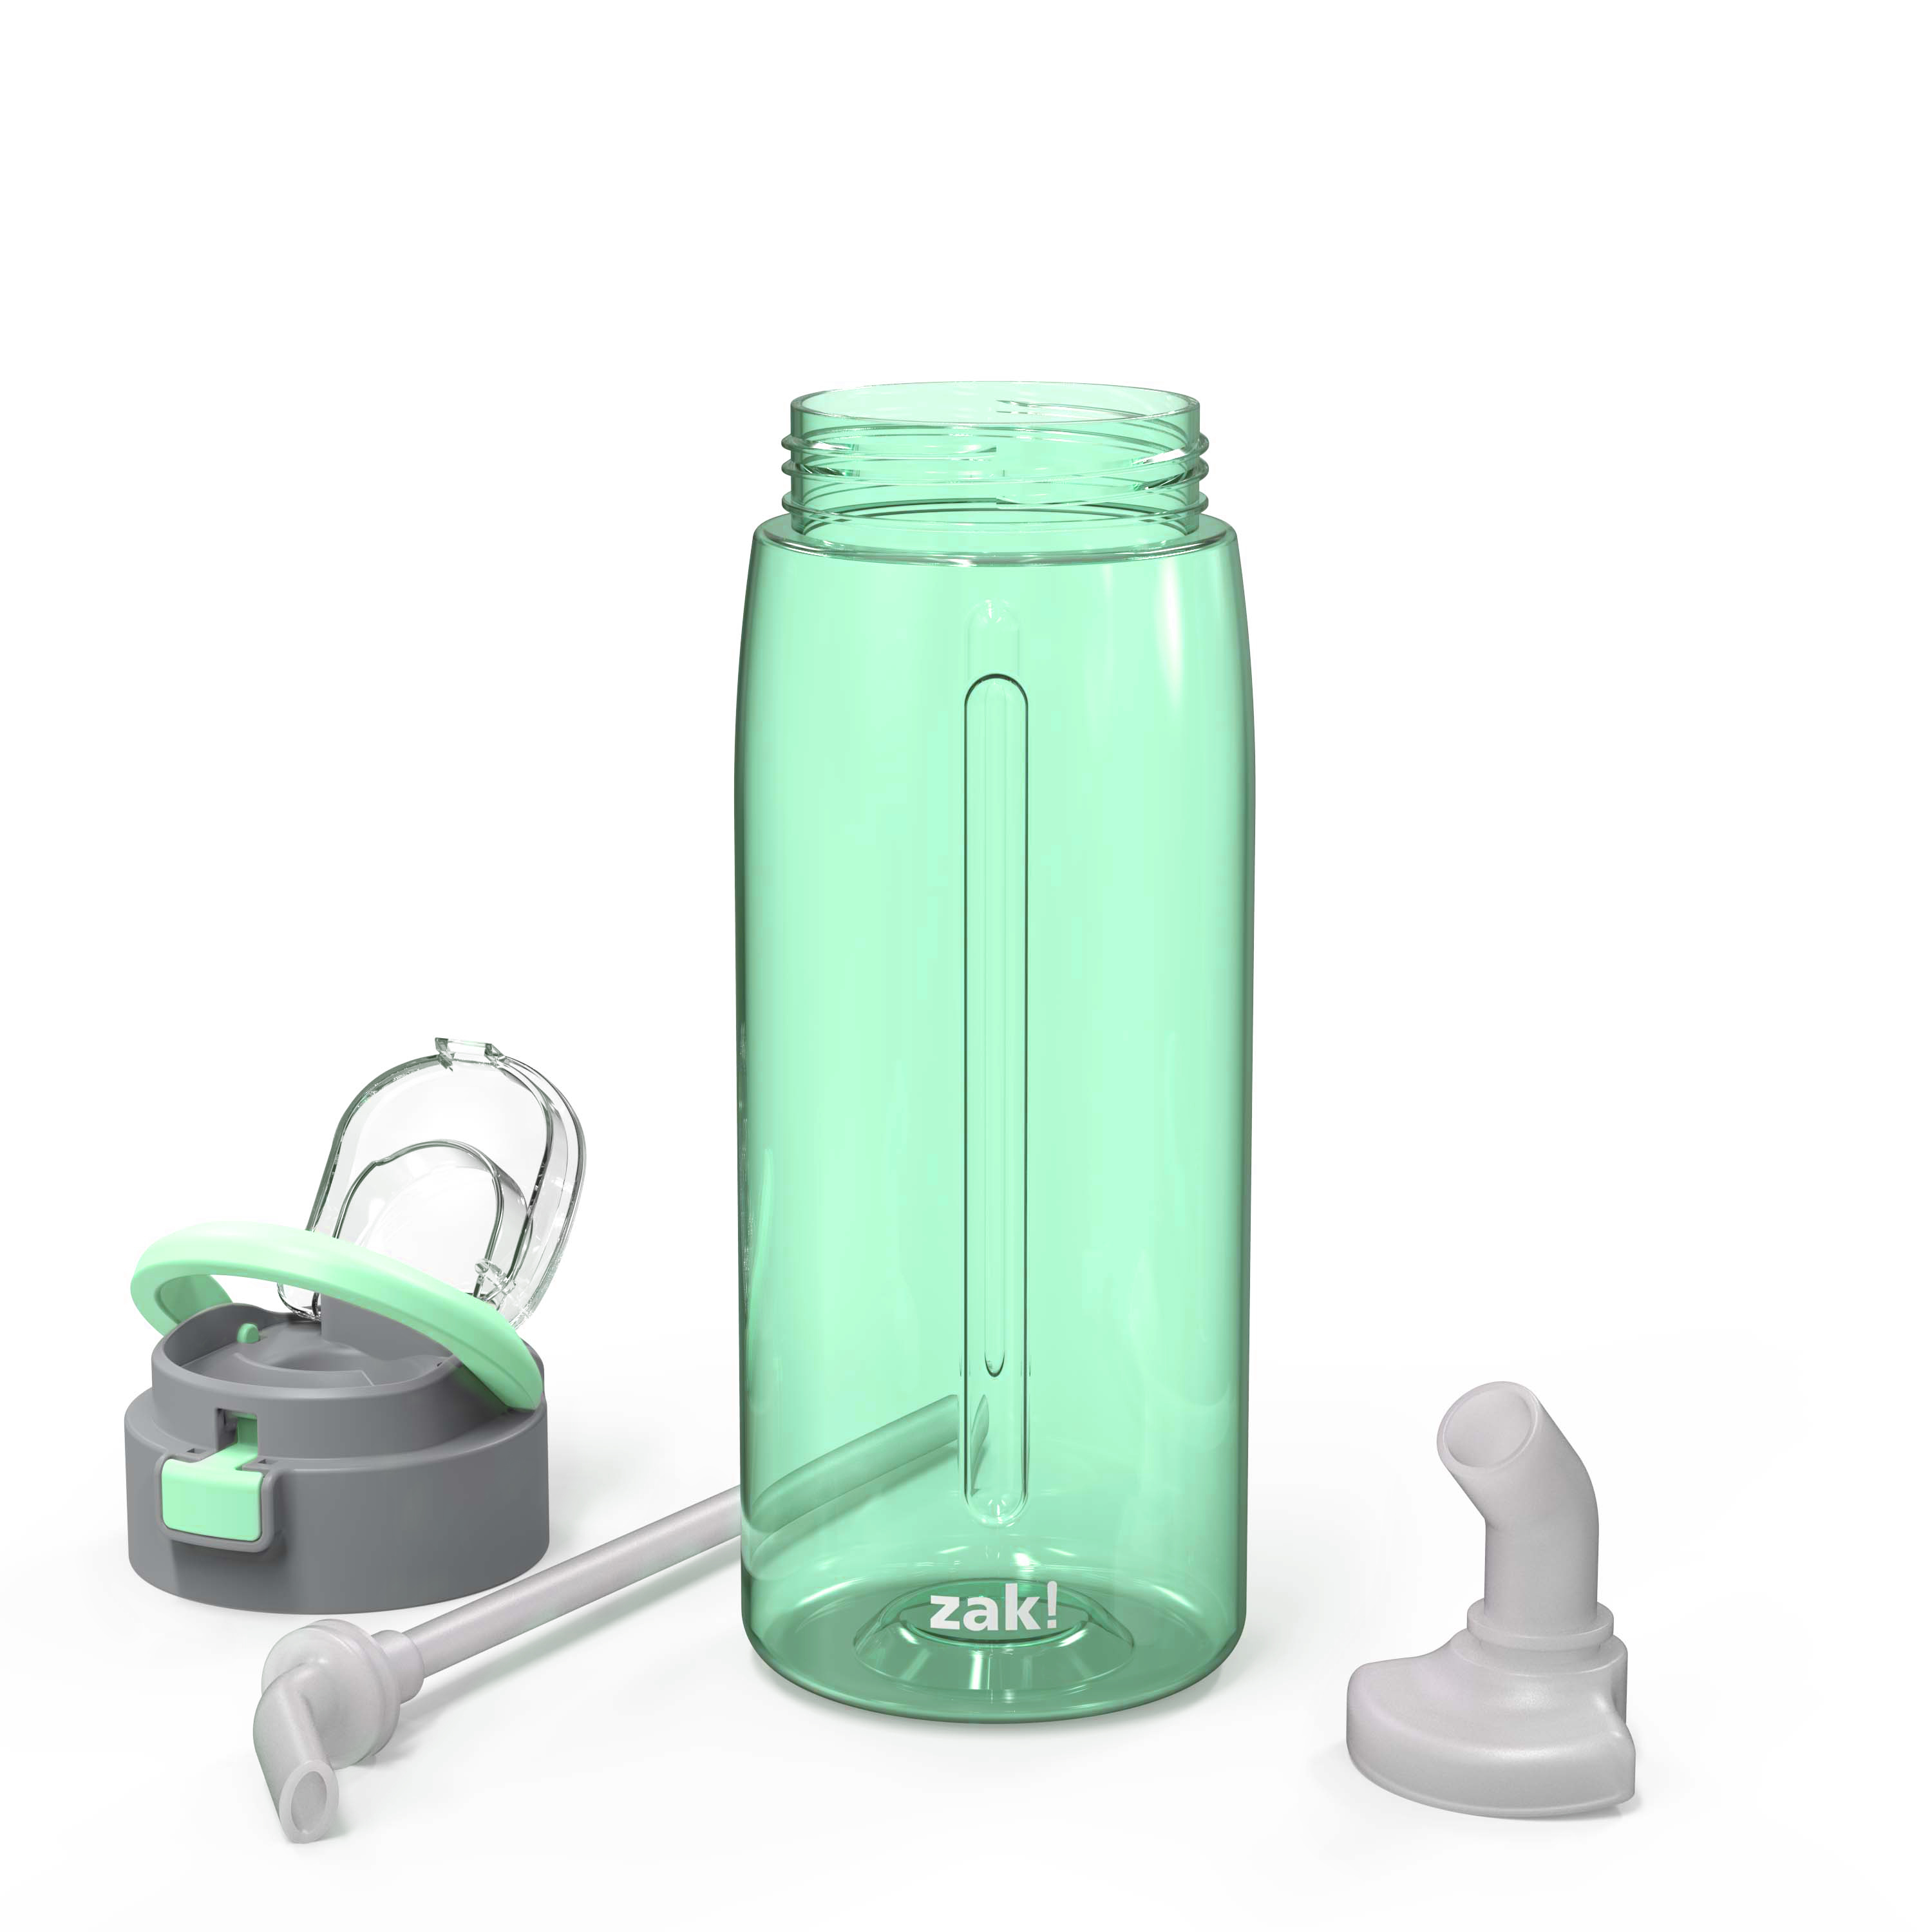 Genesis 32 ounce Reusable Plastic Water Bottle with Interchangeable Spouts, Neo Mint slideshow image 4